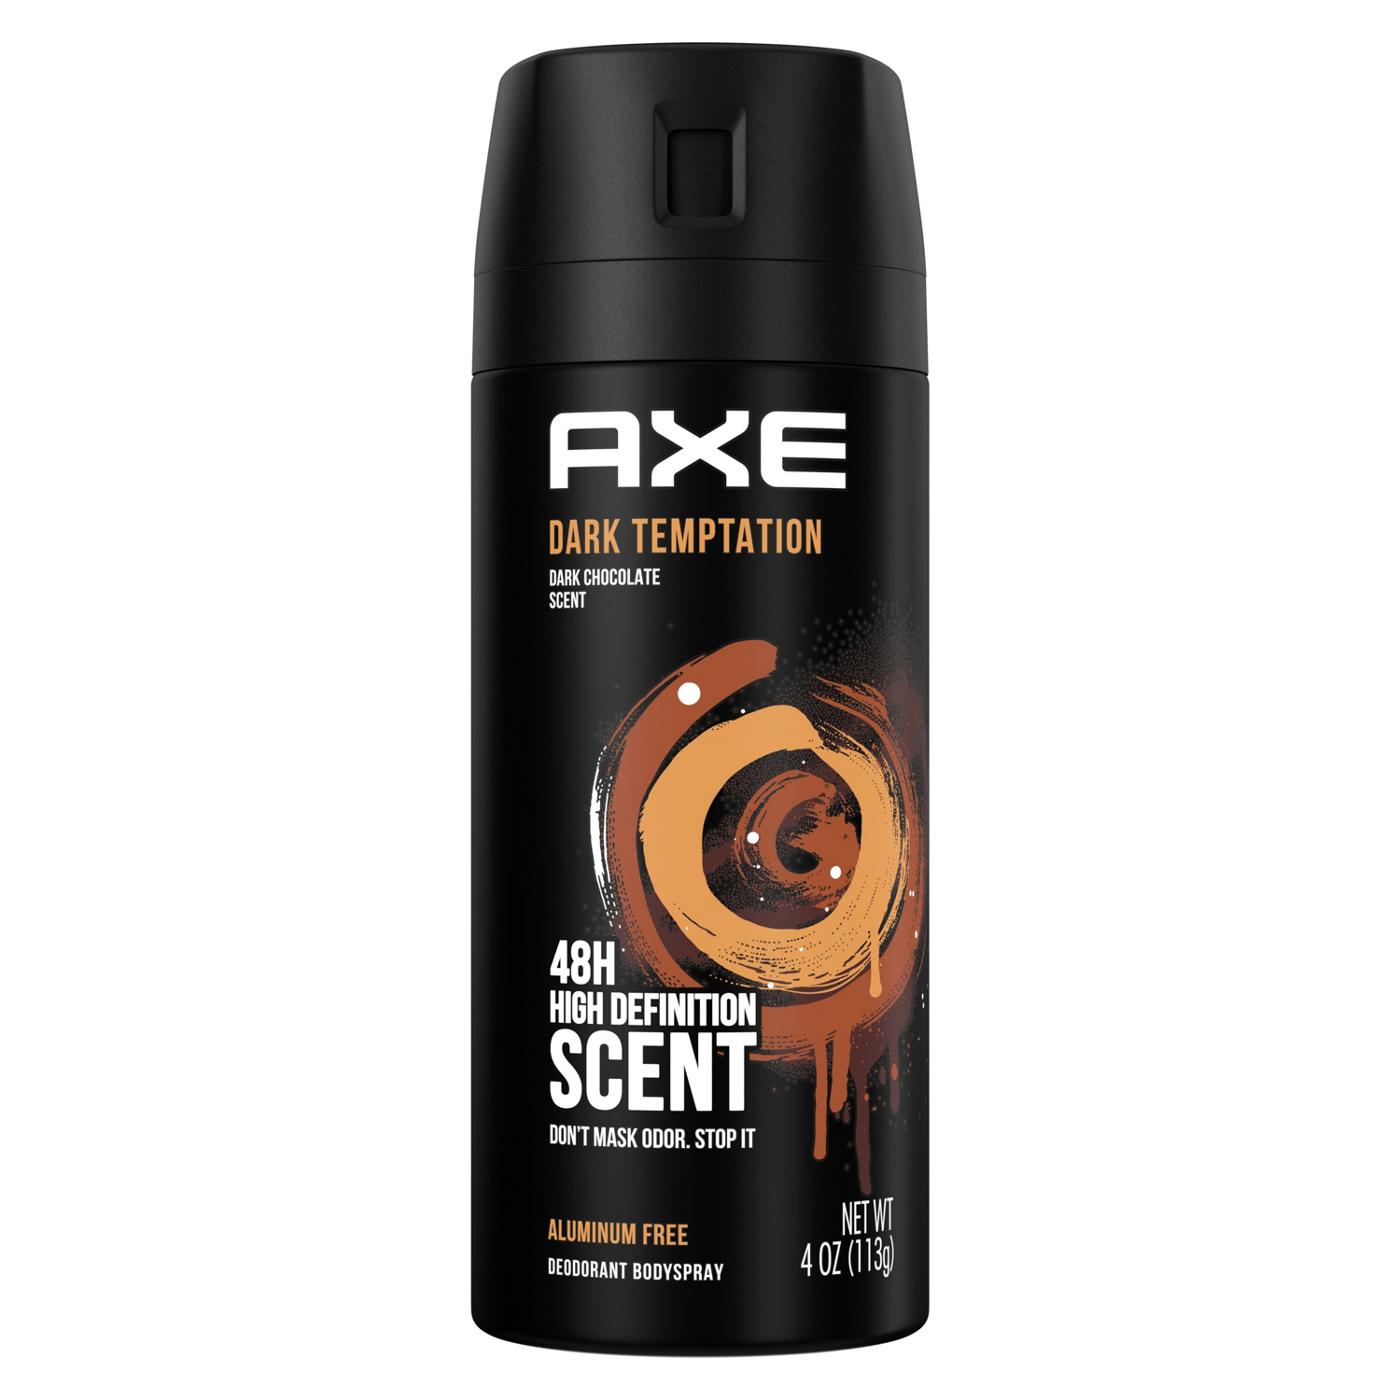 AXE Body Spray Deodorant - Temptation - Shop Deodorant & Antiperspirant H-E-B